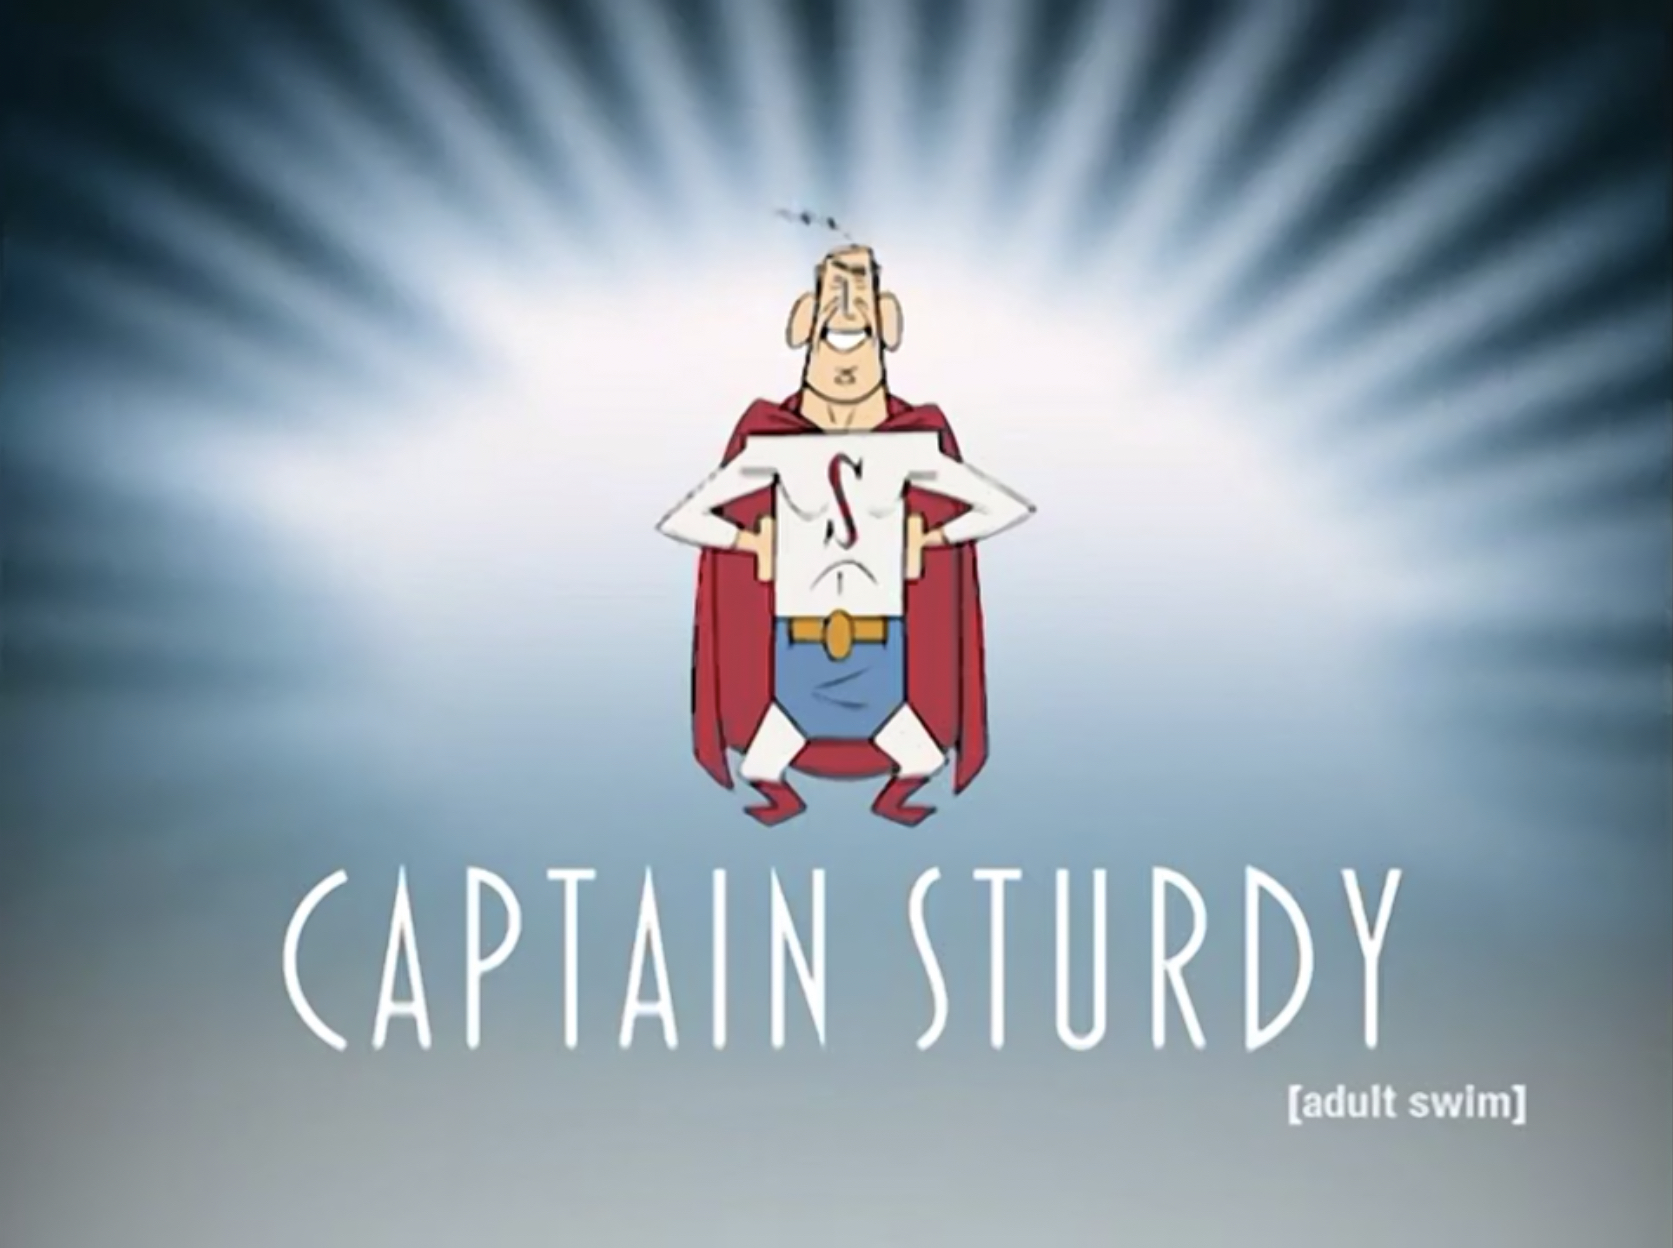 Captain sturdy logo.jpeg